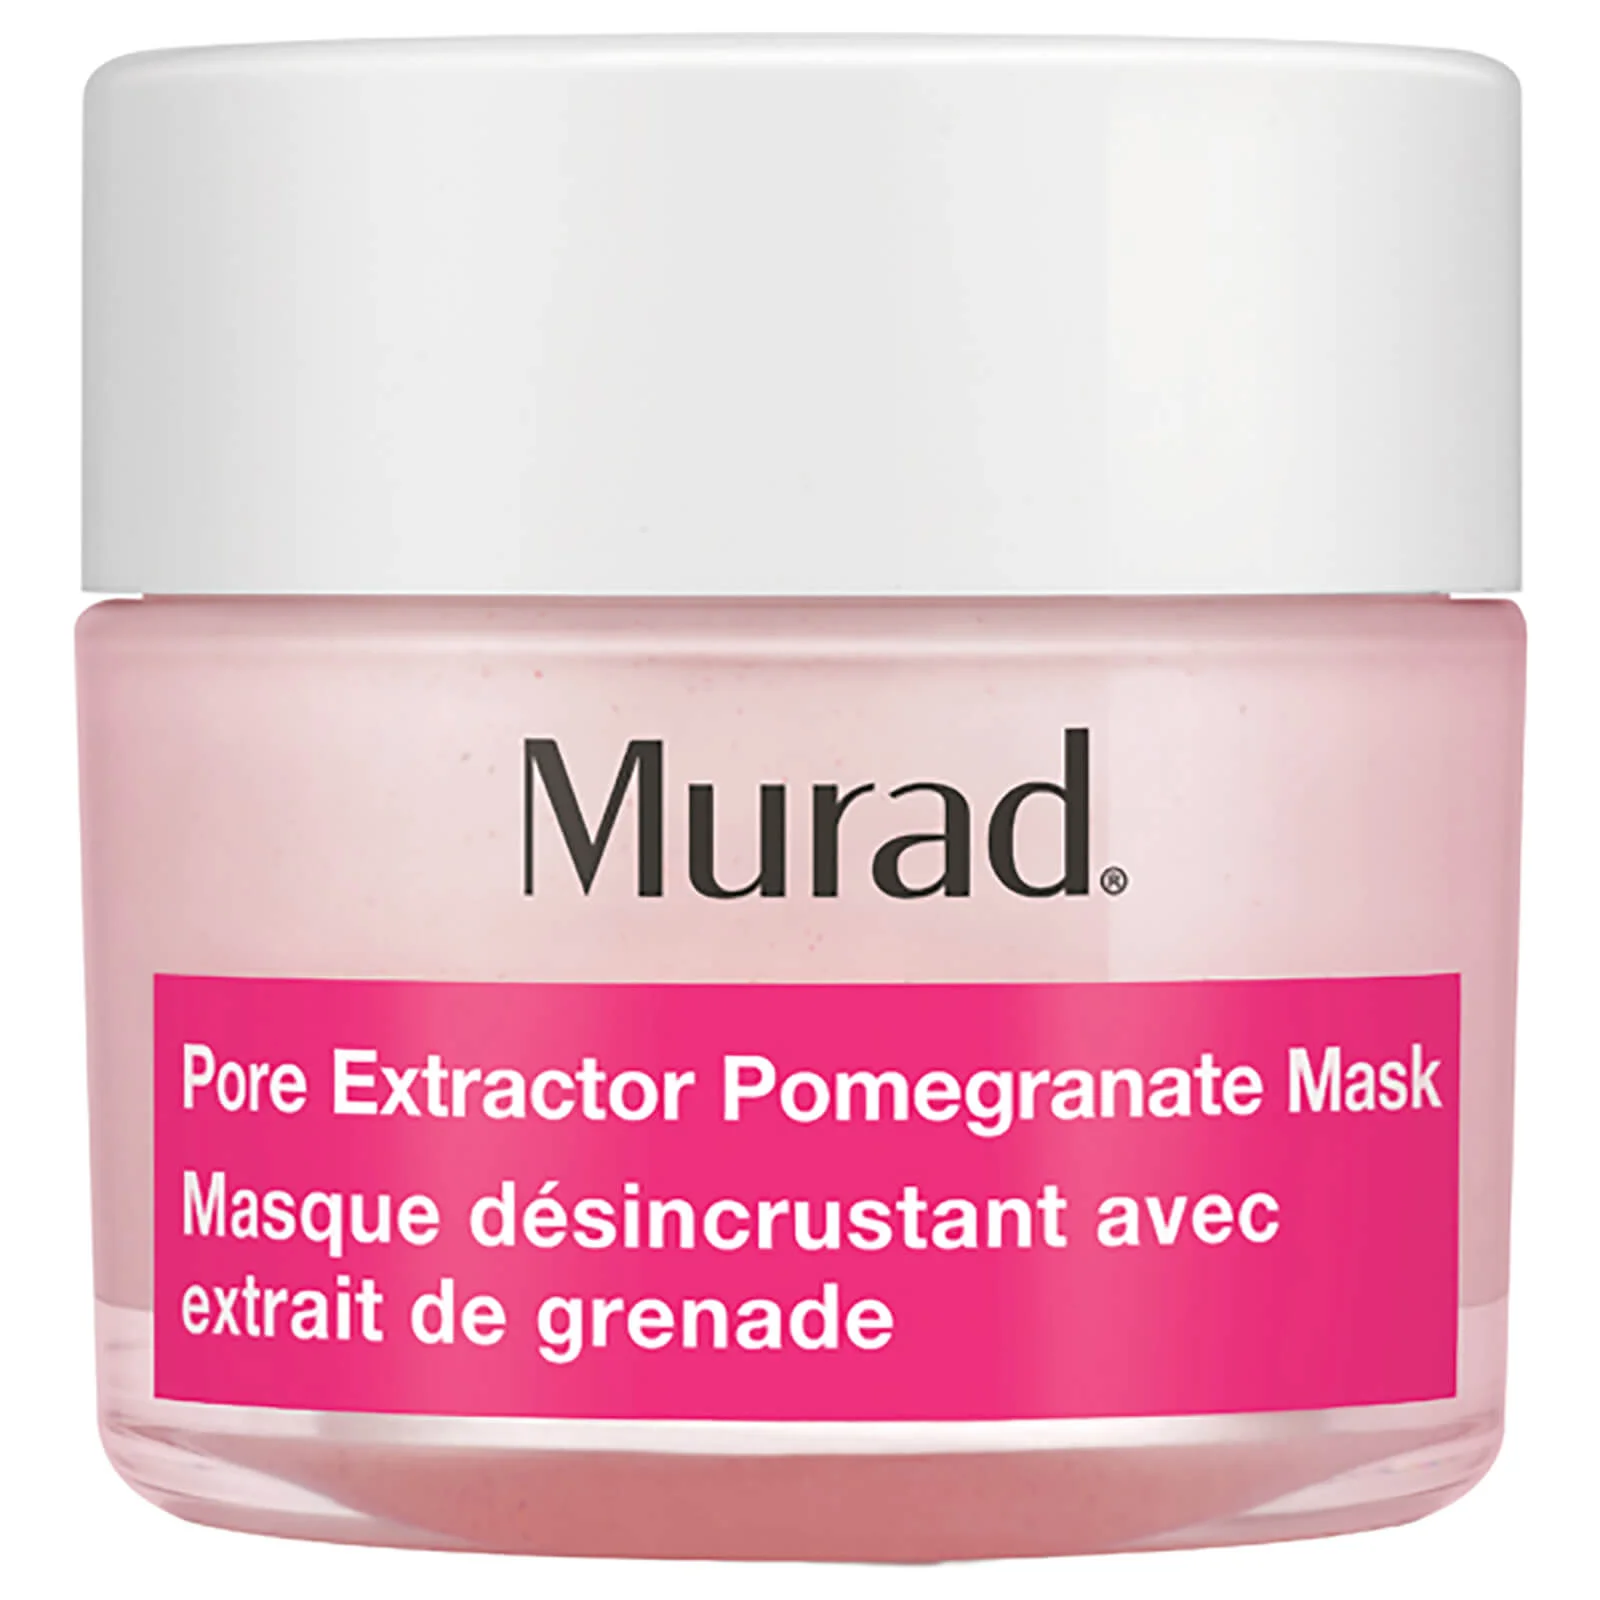 Murad Pore Extractor Pomegranate Mask 50ml Image 1